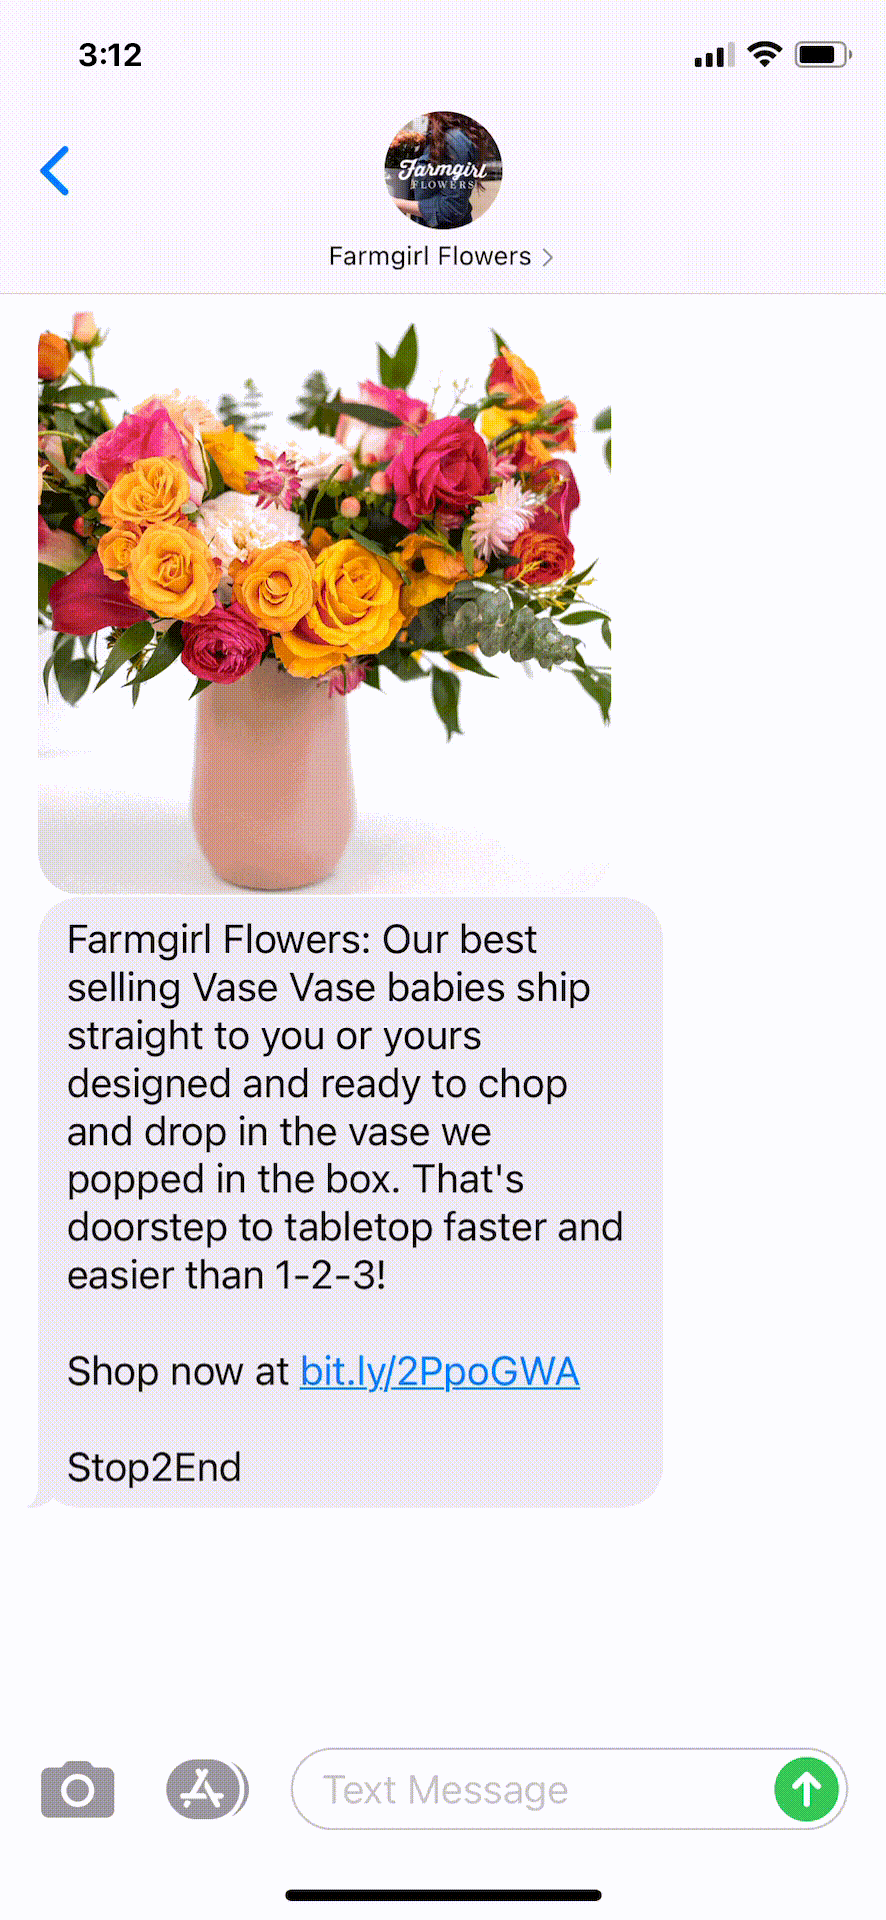 Farmgirl-Flowers-Text-Message-Marketing-Example-04.24.2021